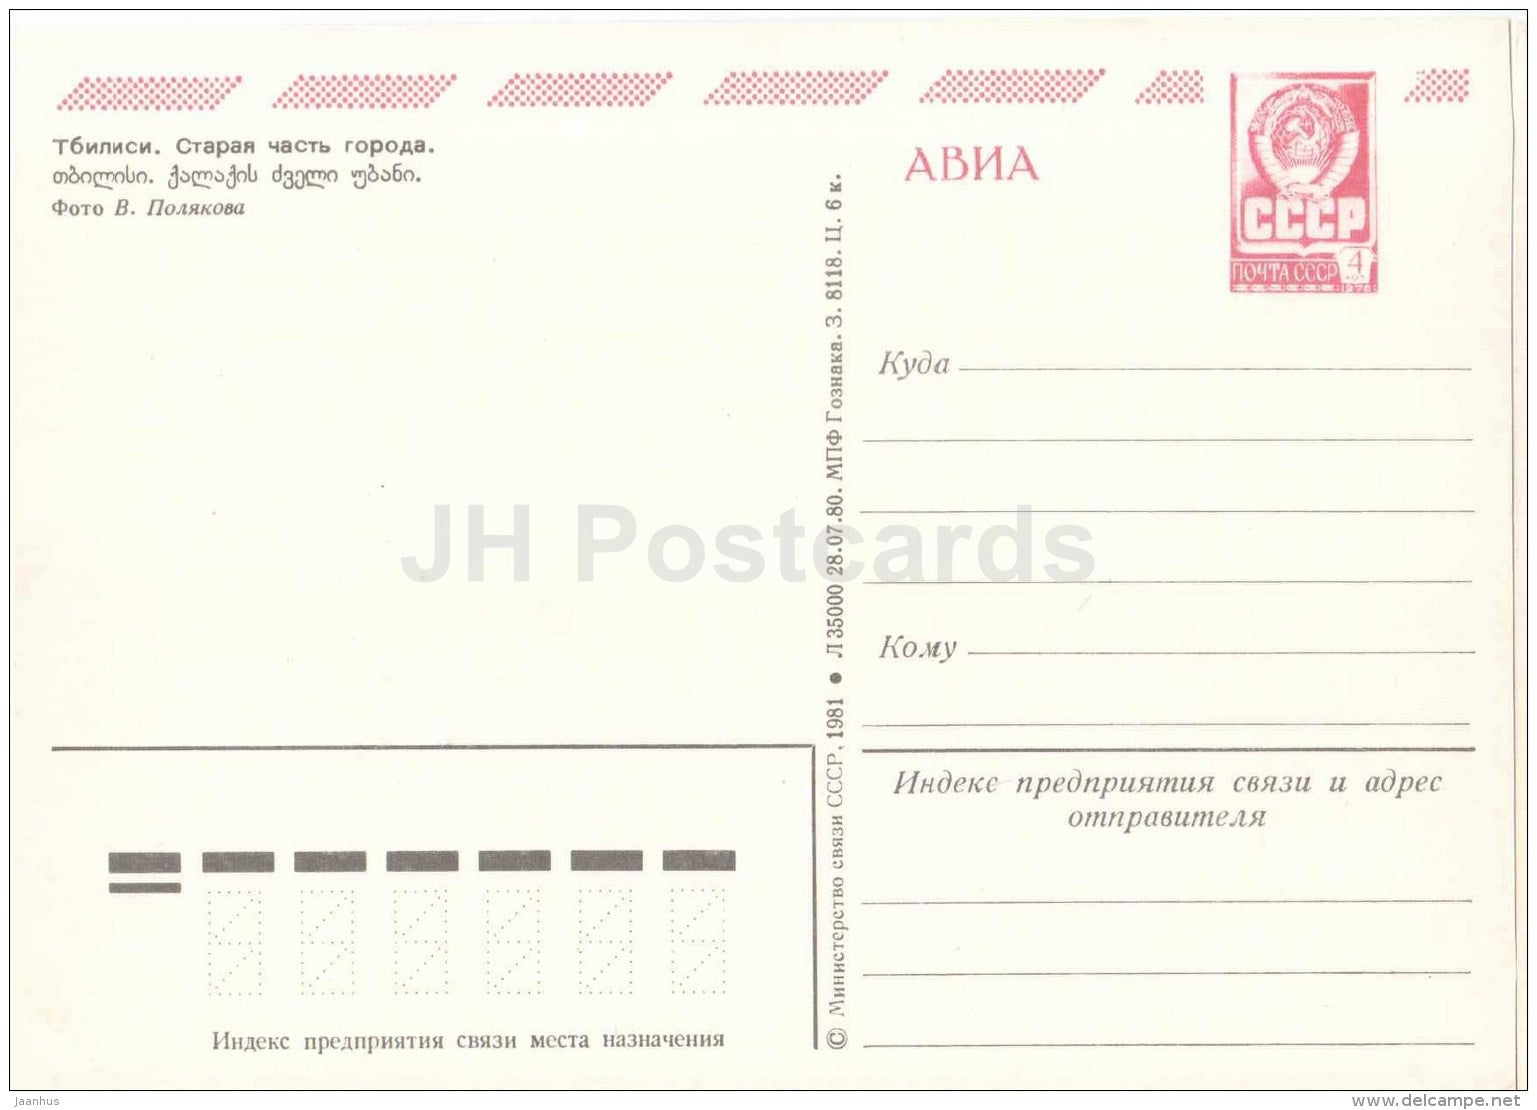 old part of the city - Tbilisi - postal stationery - AVIA - 1981 - Georgia USSR - unused - JH Postcards